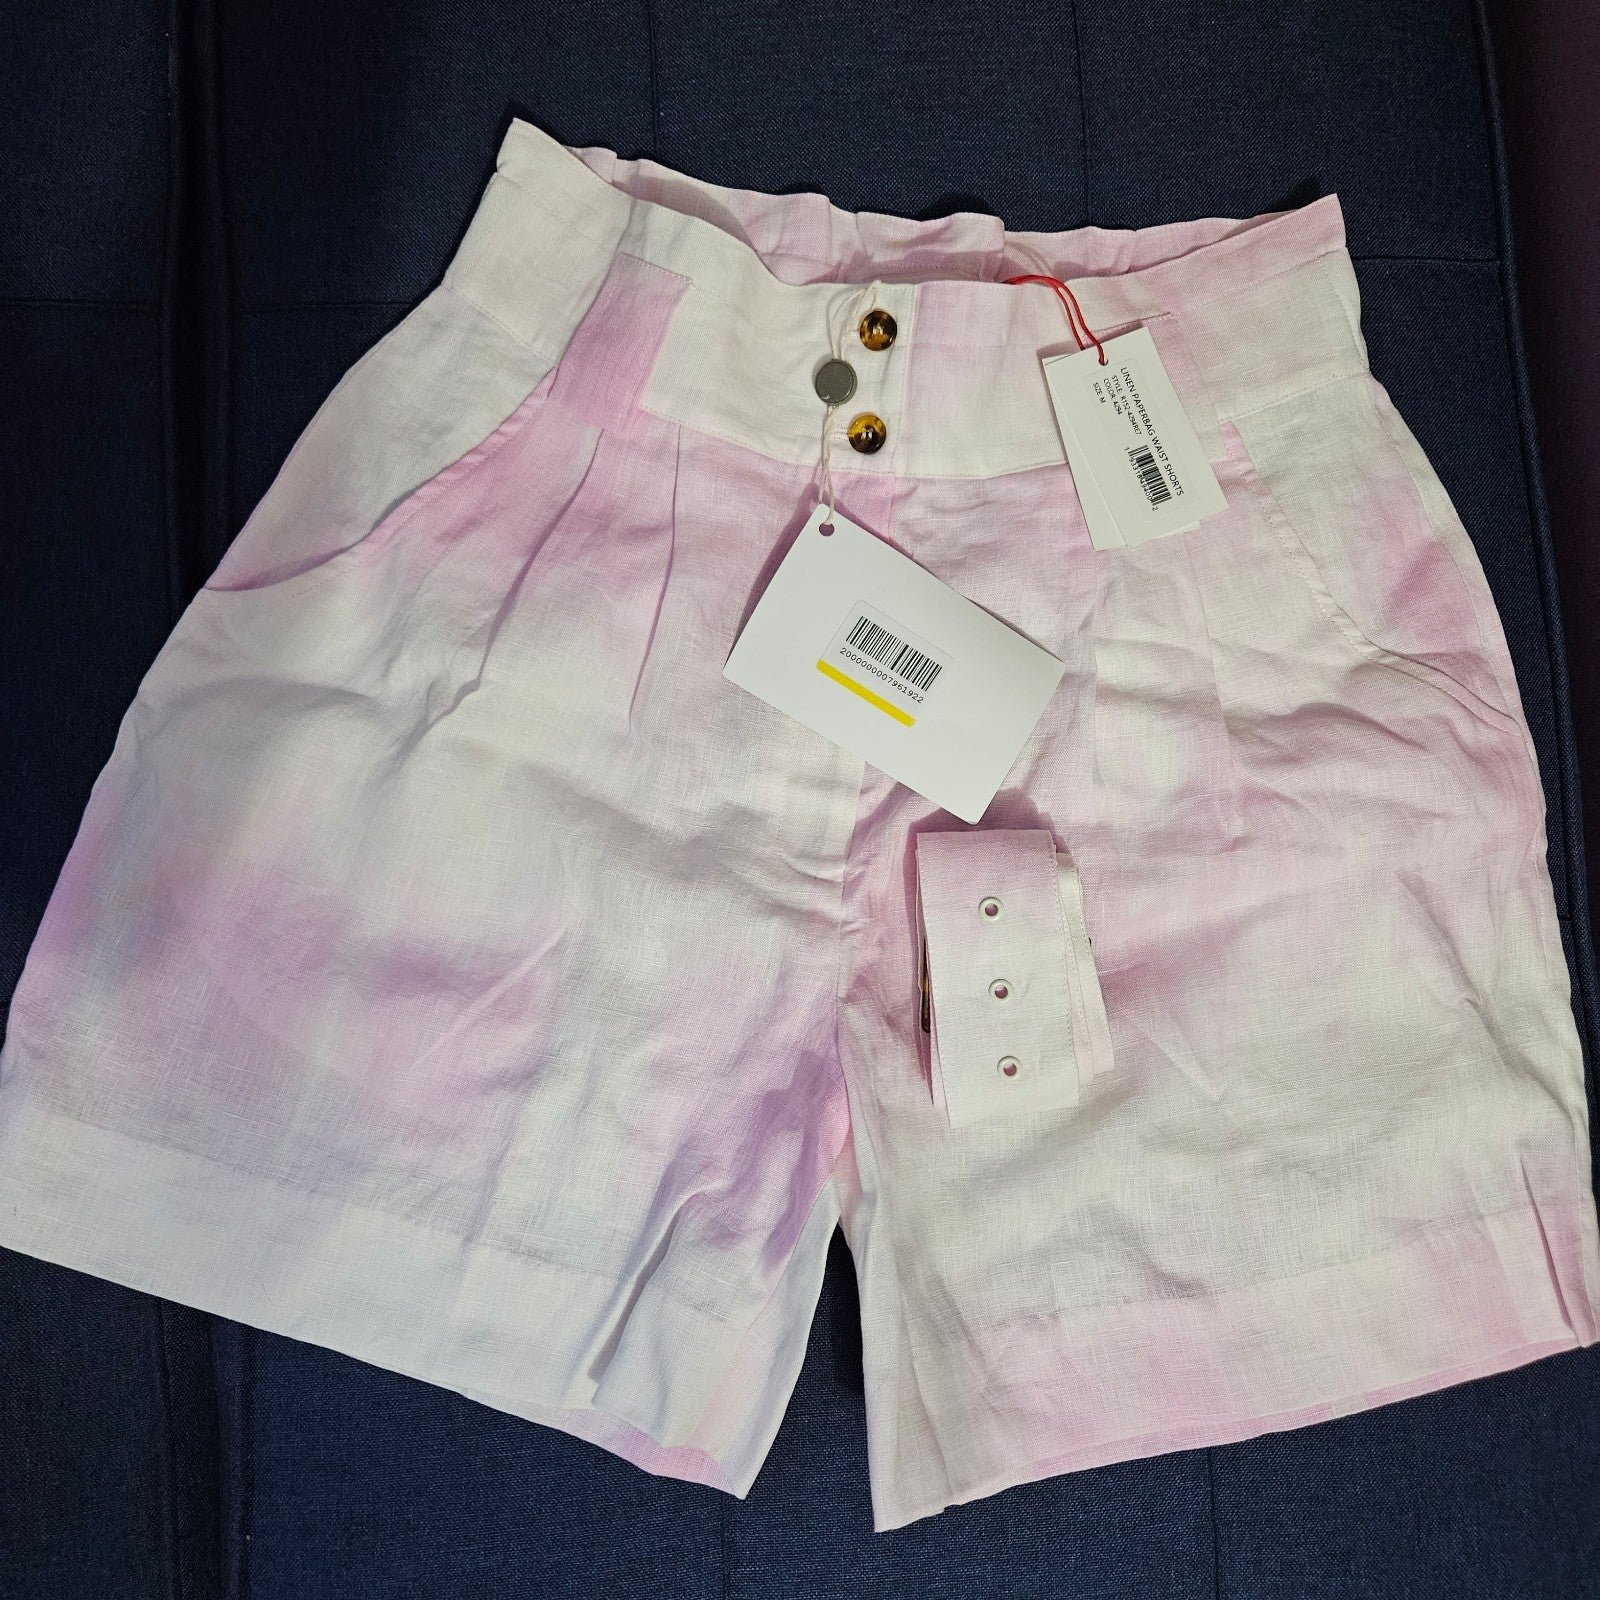 Amazing Solid & Striped Women Tie Dye High Waist Shorts sz M mhIAsxjzO Factory Price